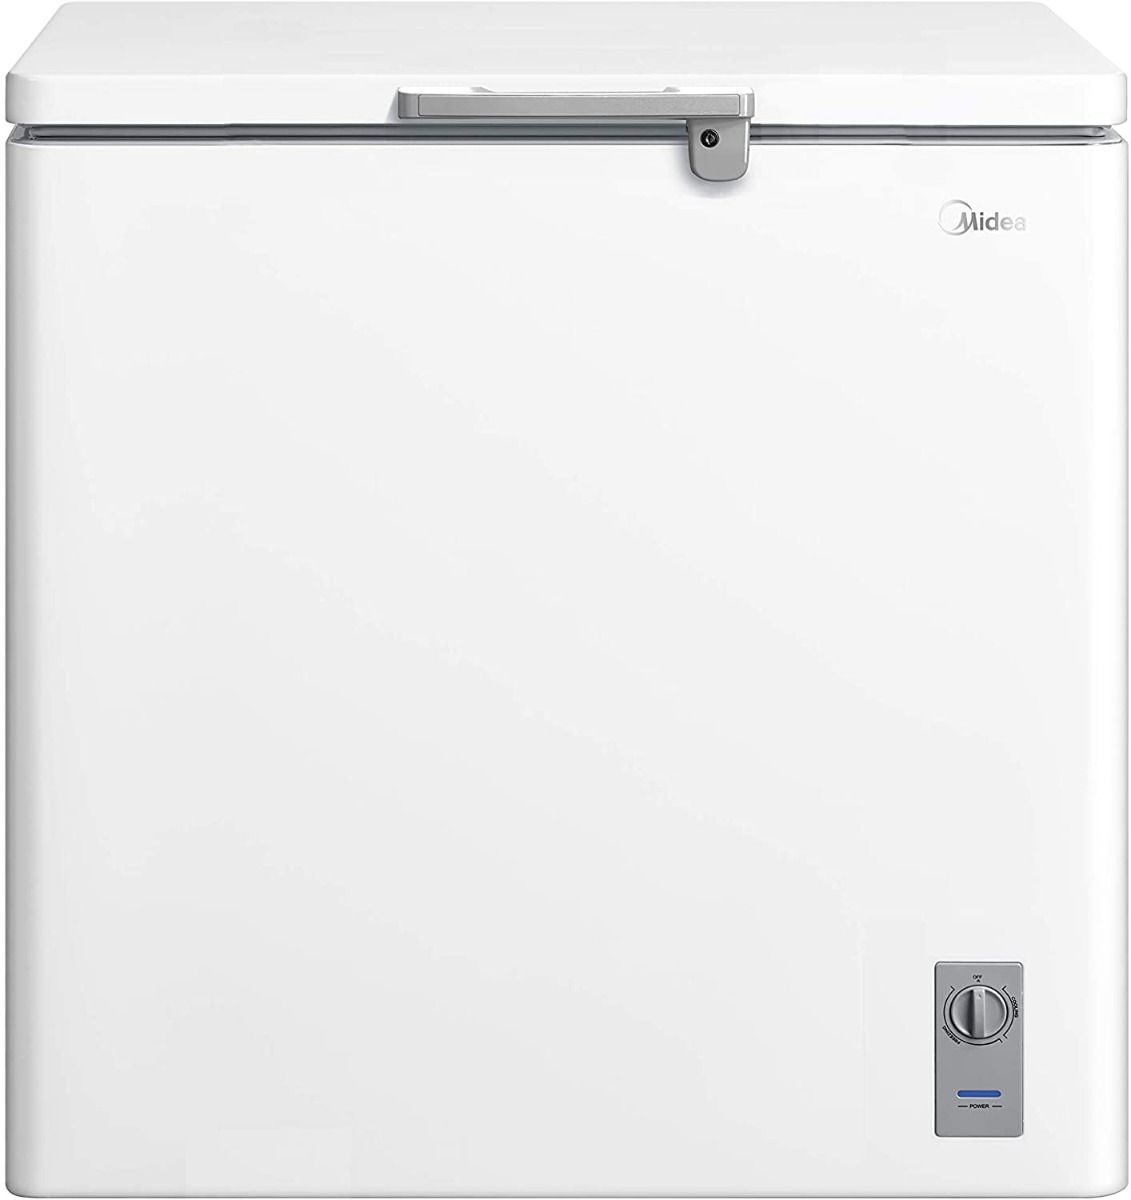 Midea 259 Liters Chest Freezer, White - HS259CN